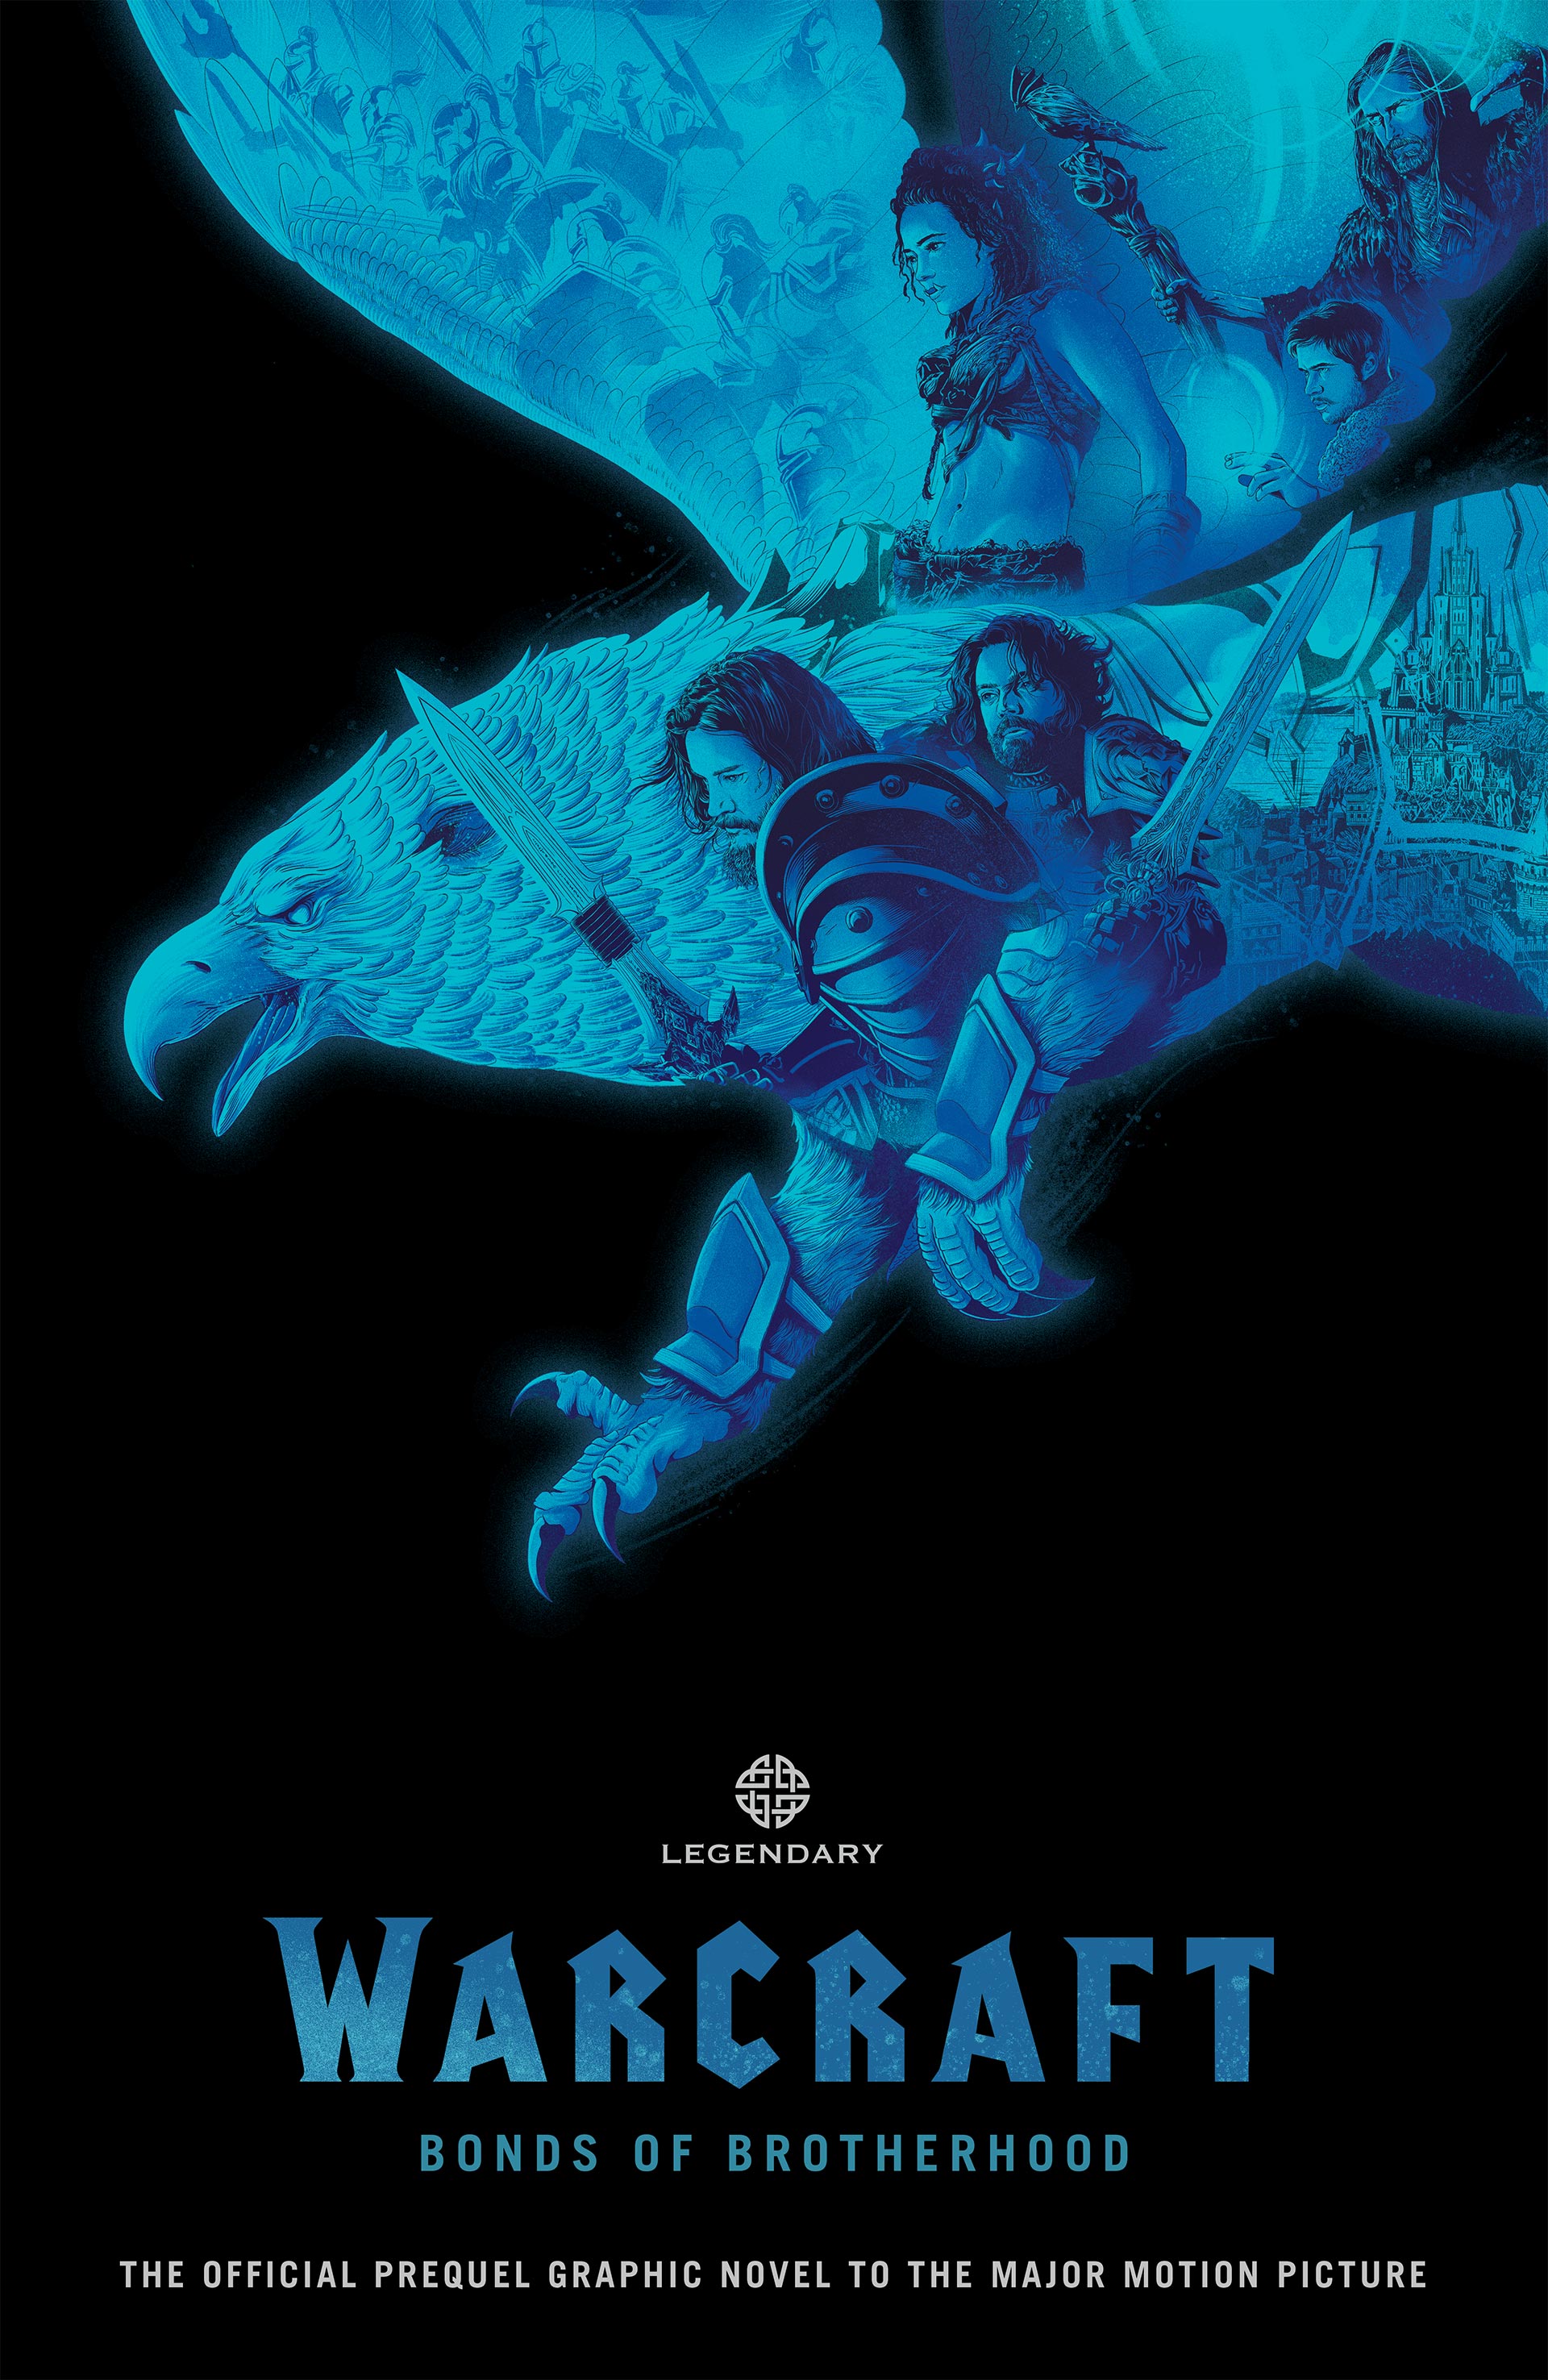 WarcraftBrotherhood_Comic_Poster